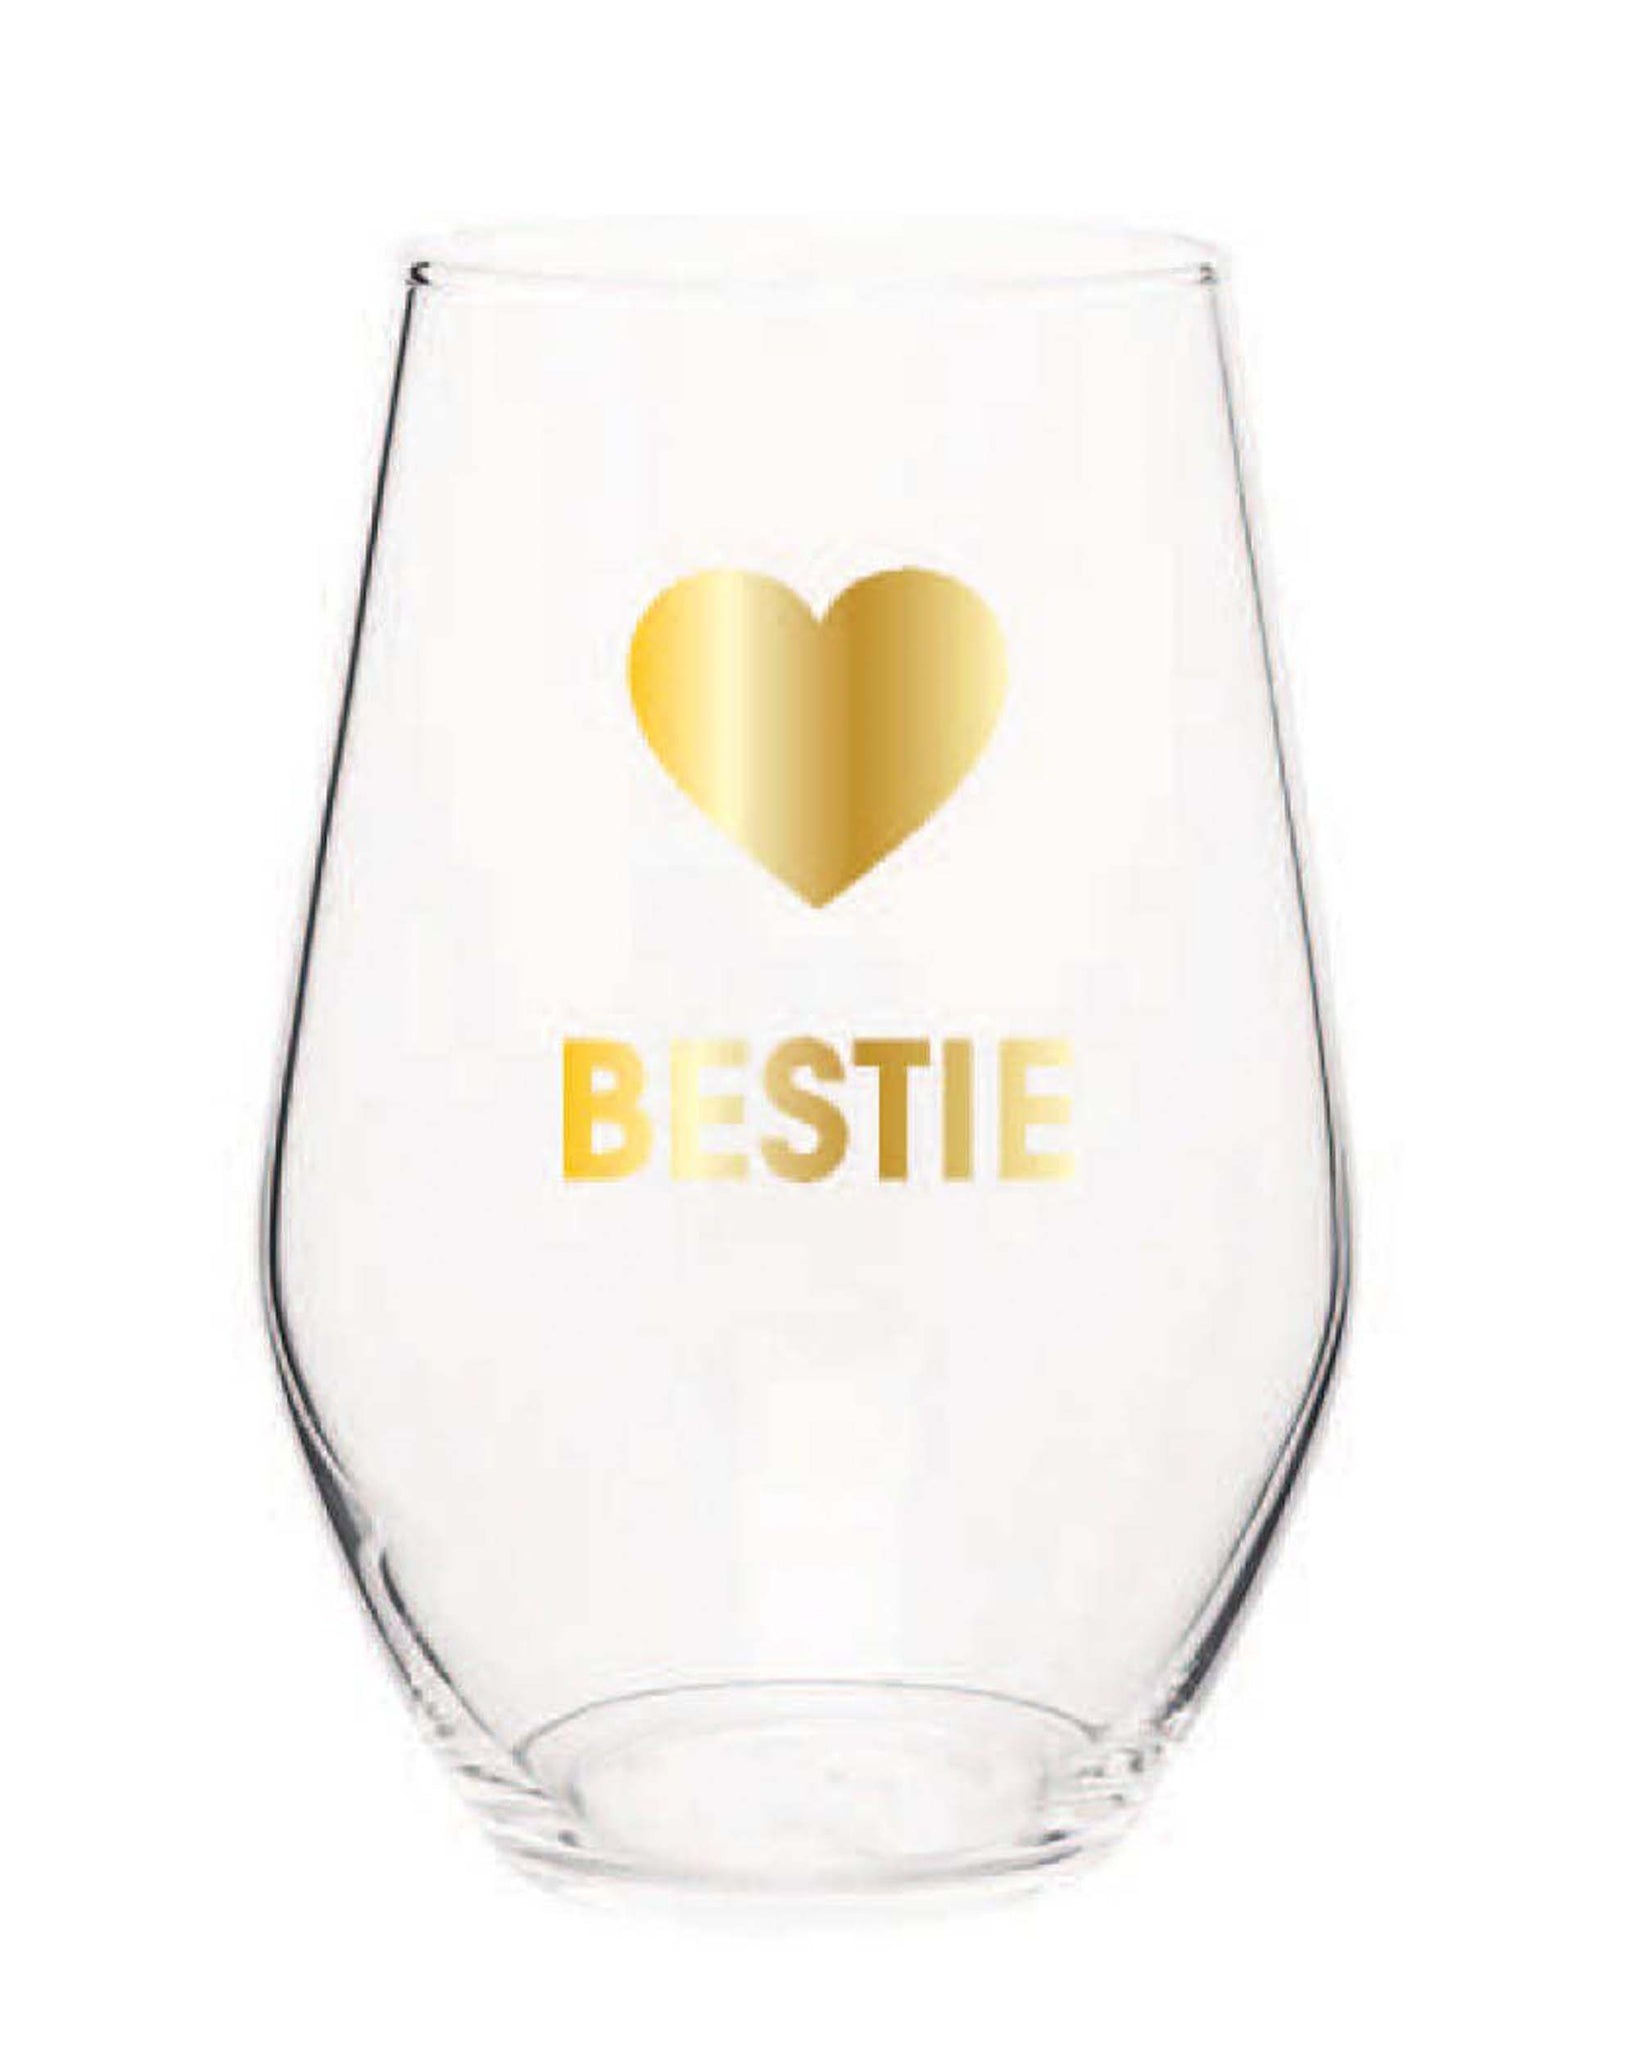 Bestie Gold Foil Stemless Wine Glass